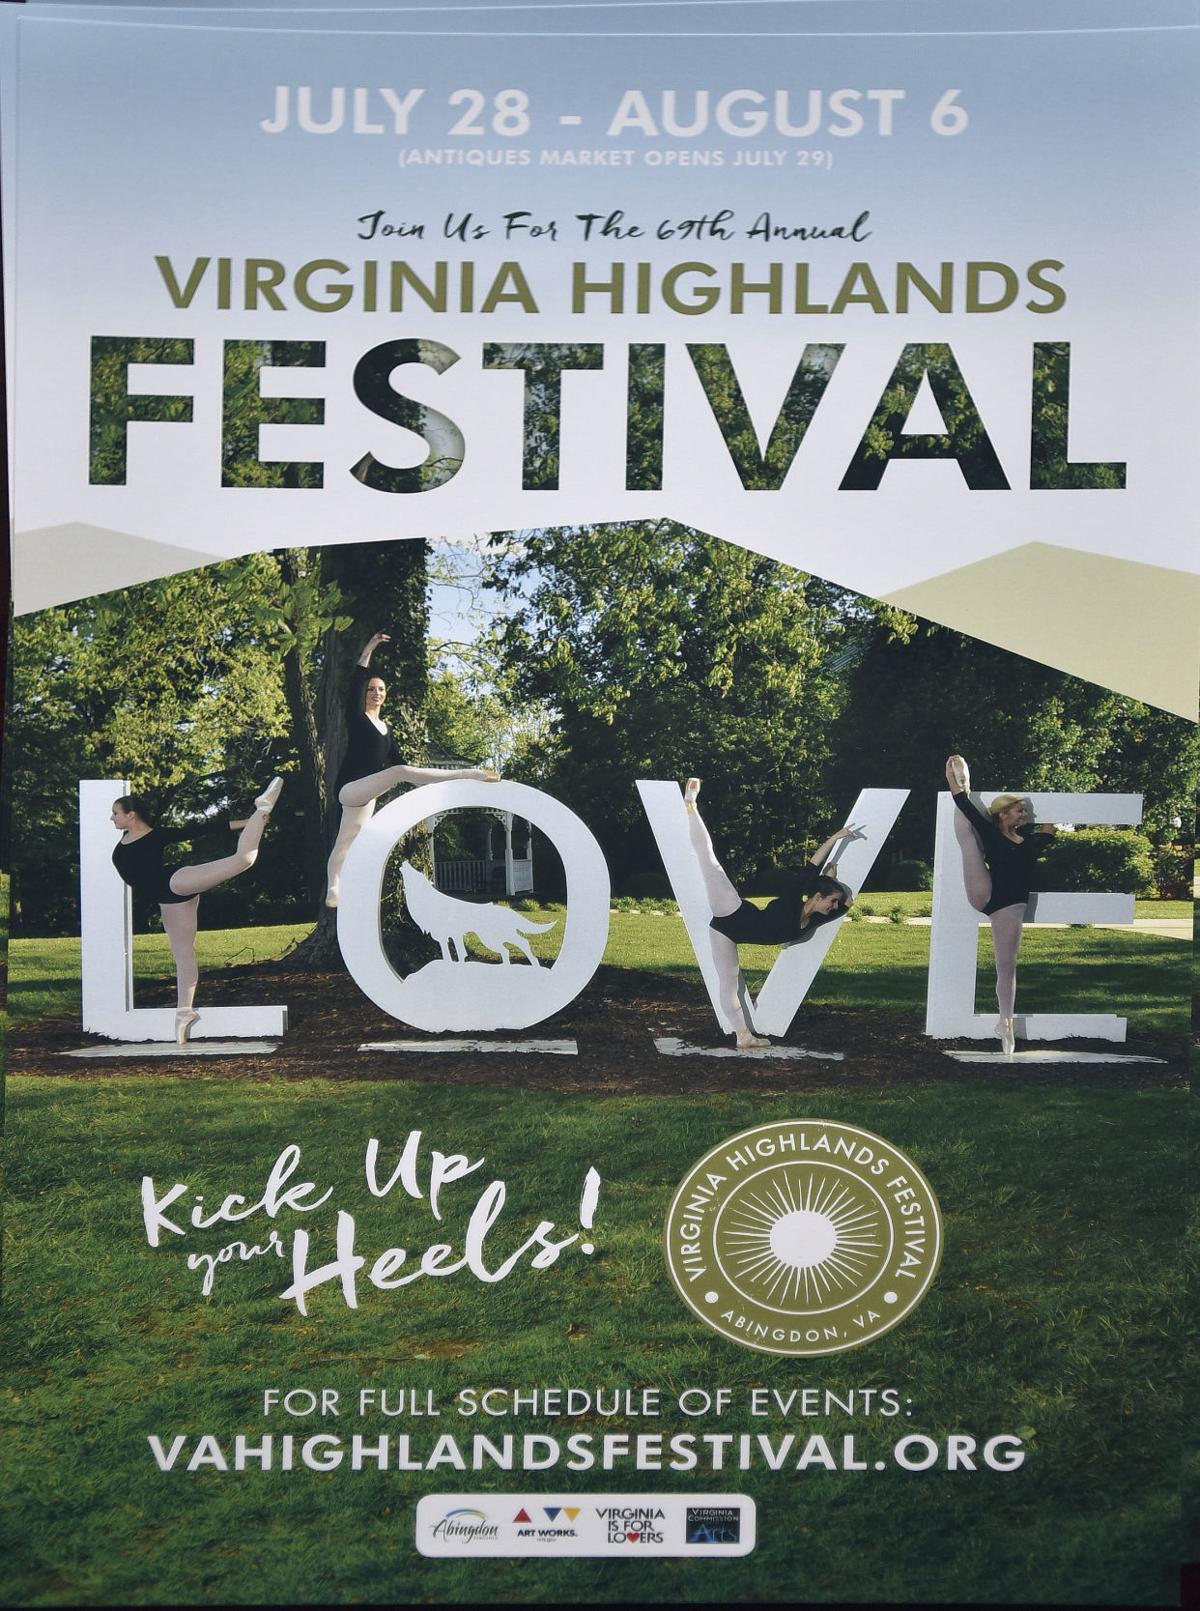 Annual Virginia Highlands Festival returns to Barter Green July 28